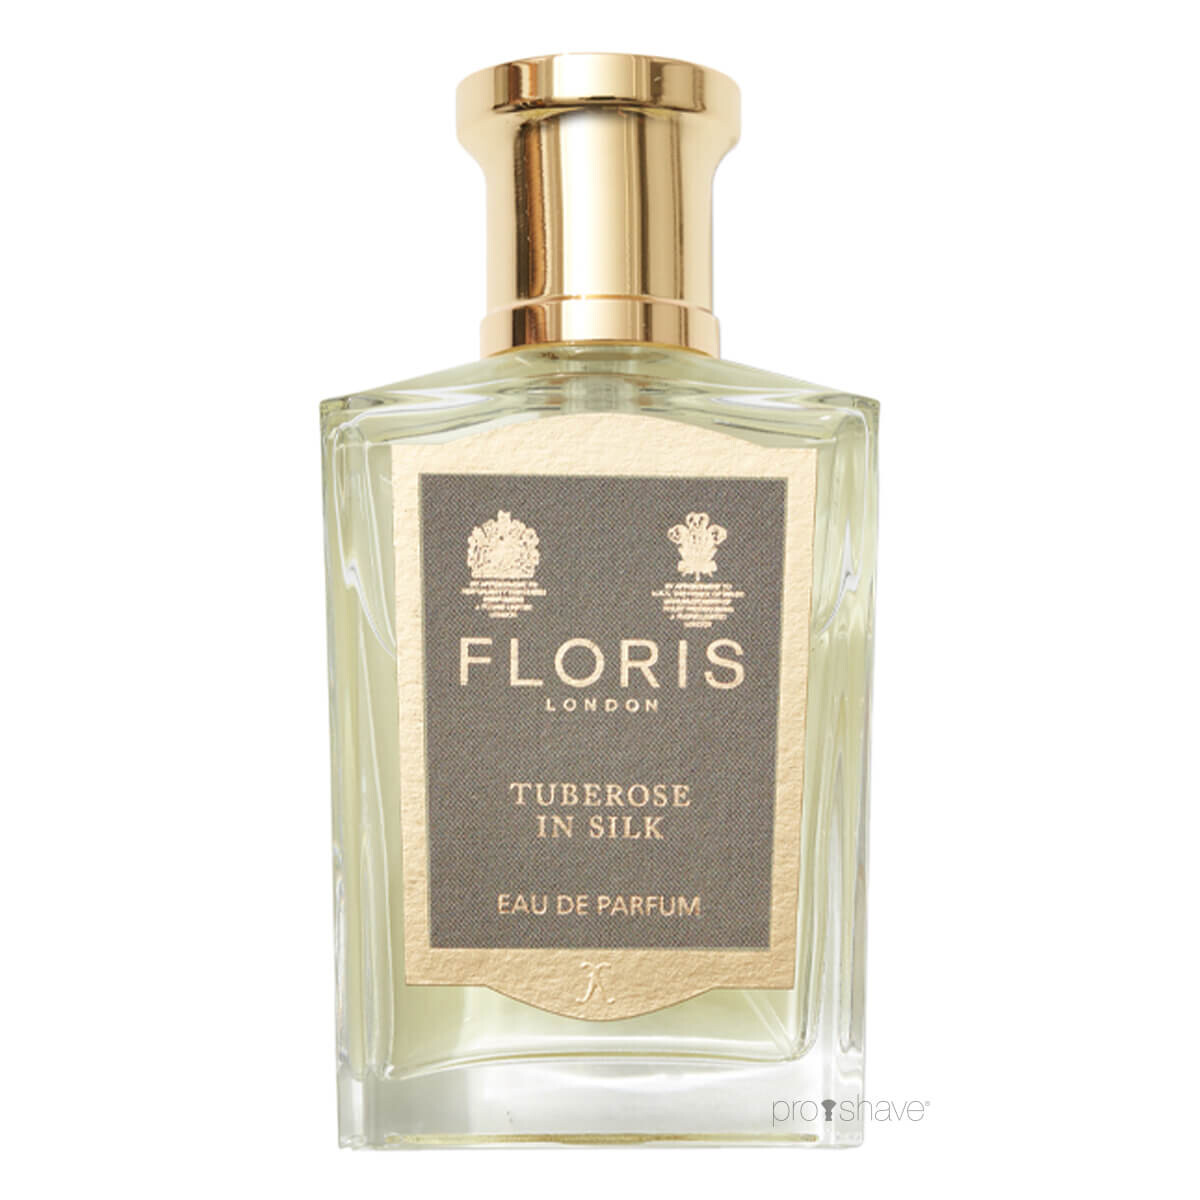 Billede af Floris Tuberose In Silk, Eau de Parfum, 50 ml.